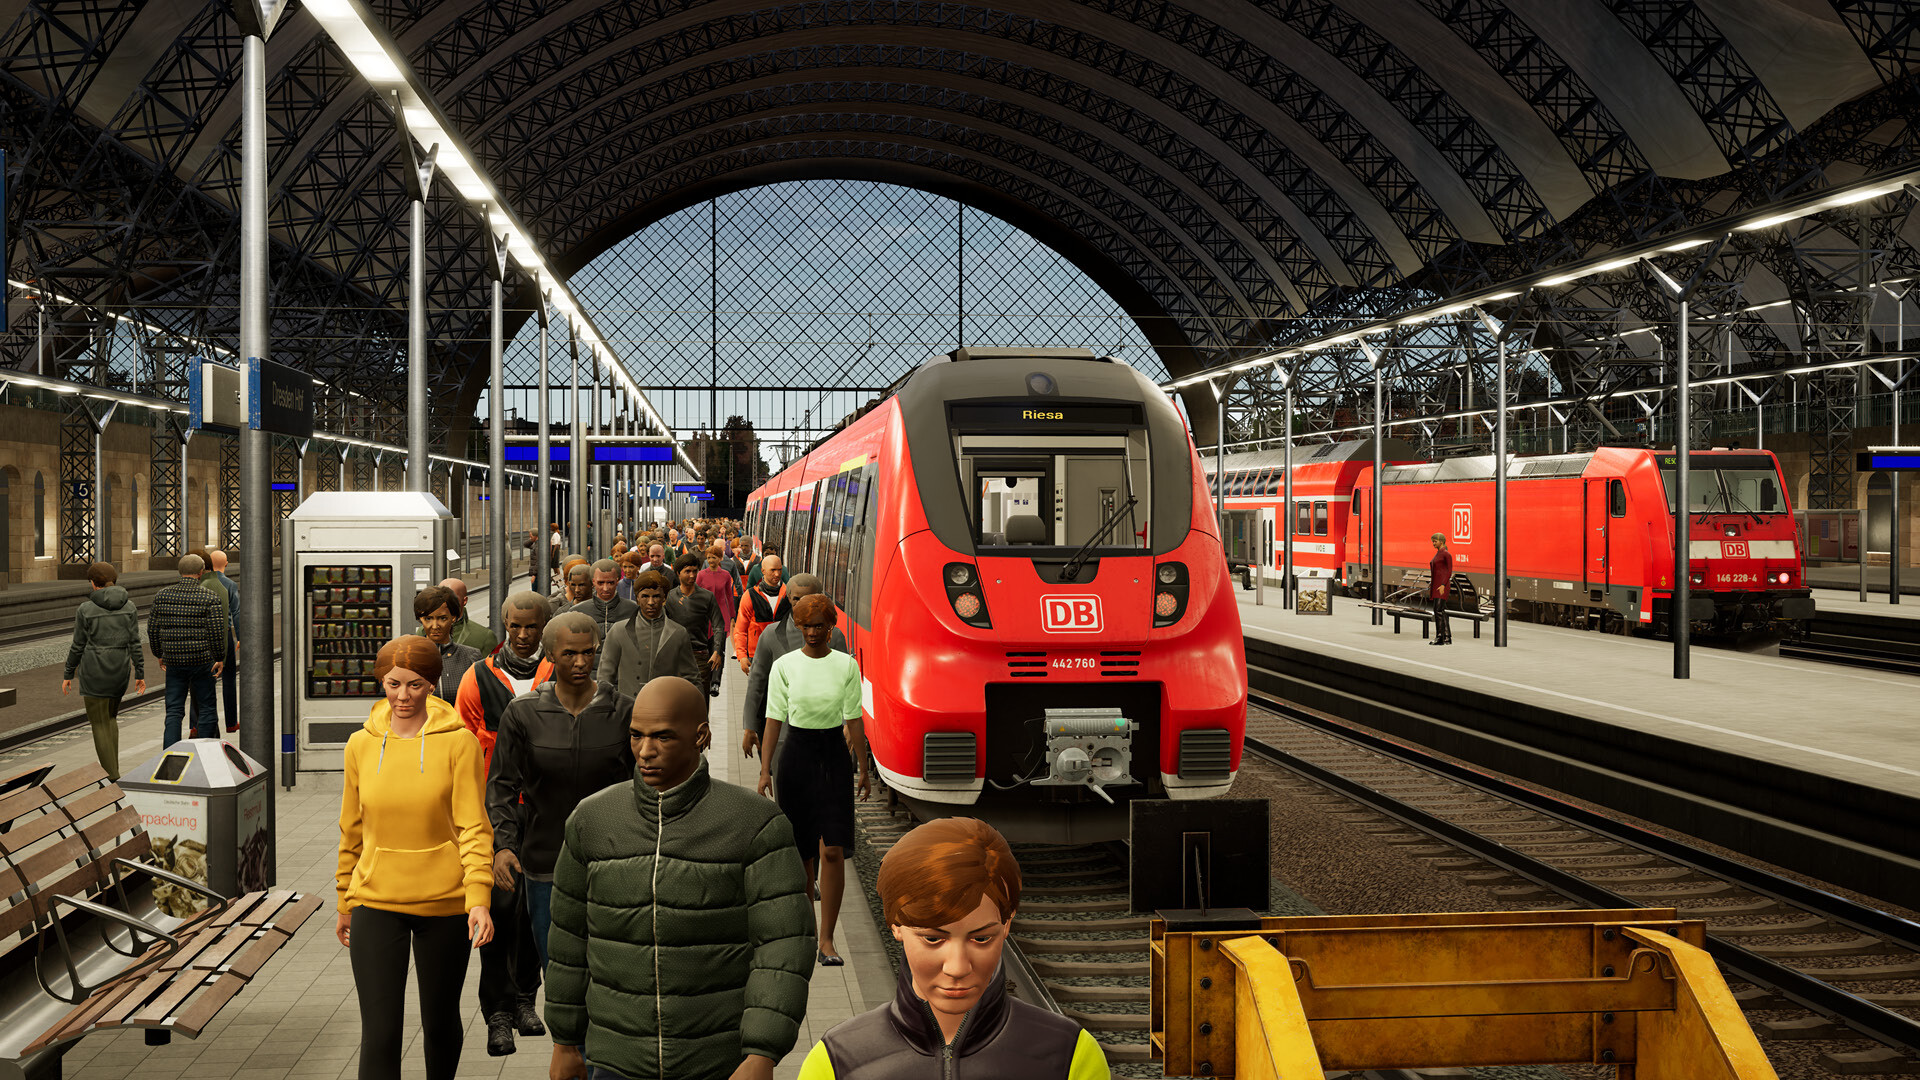 Train Sim World - Nahverkehr Dresden - Riesa Route Add-On DLC Steam CD Key 11.29 usd